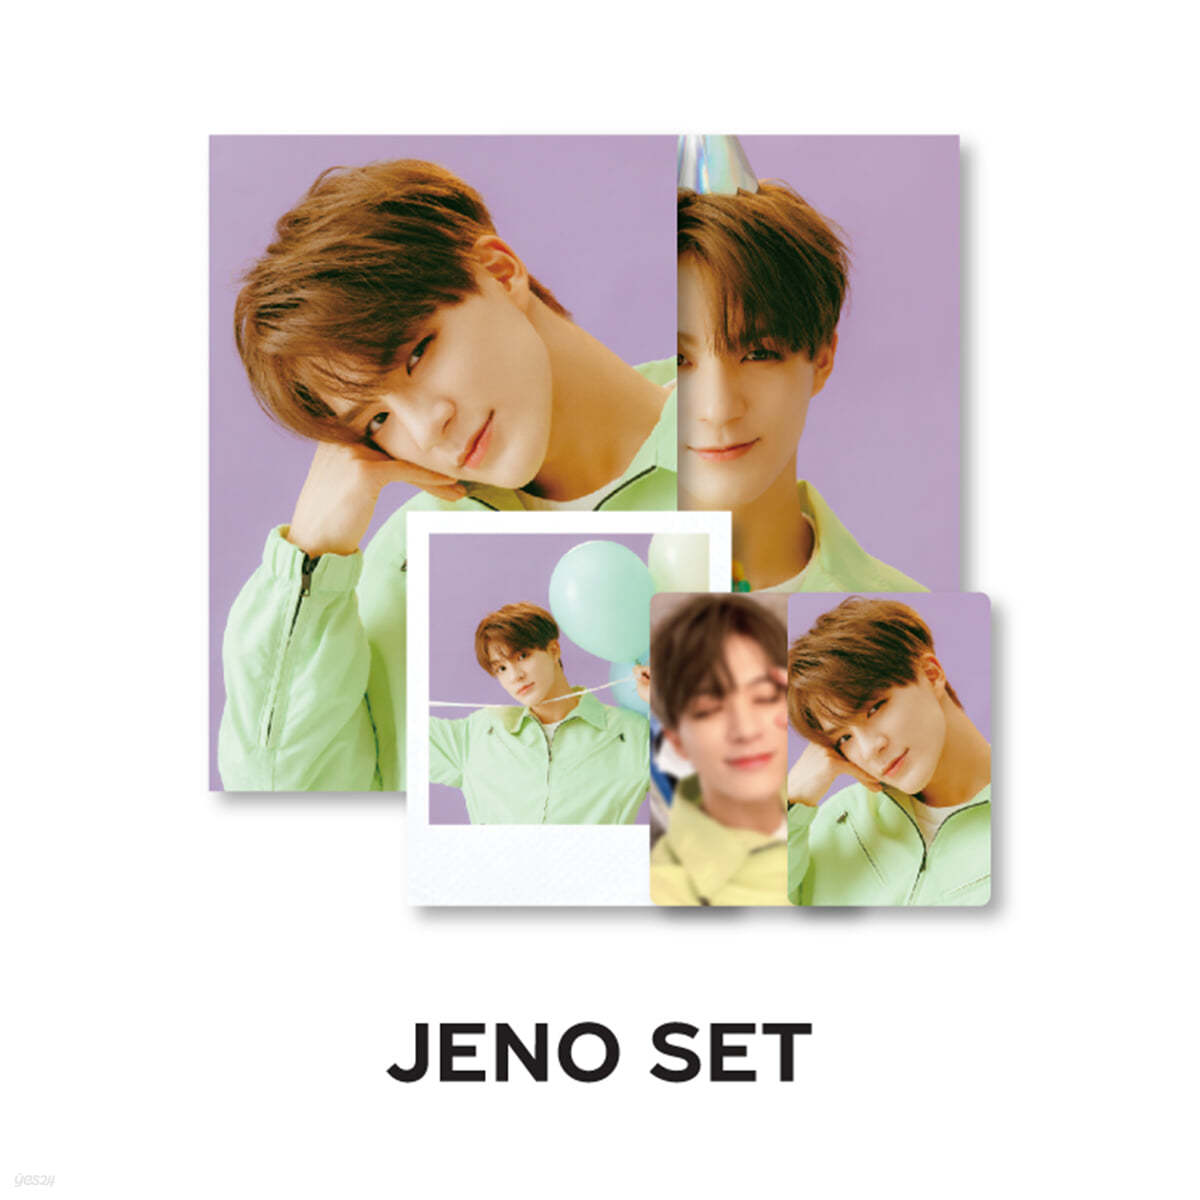 [JENO SET_NCT DREAM] 2021 SG PHOTO PACK